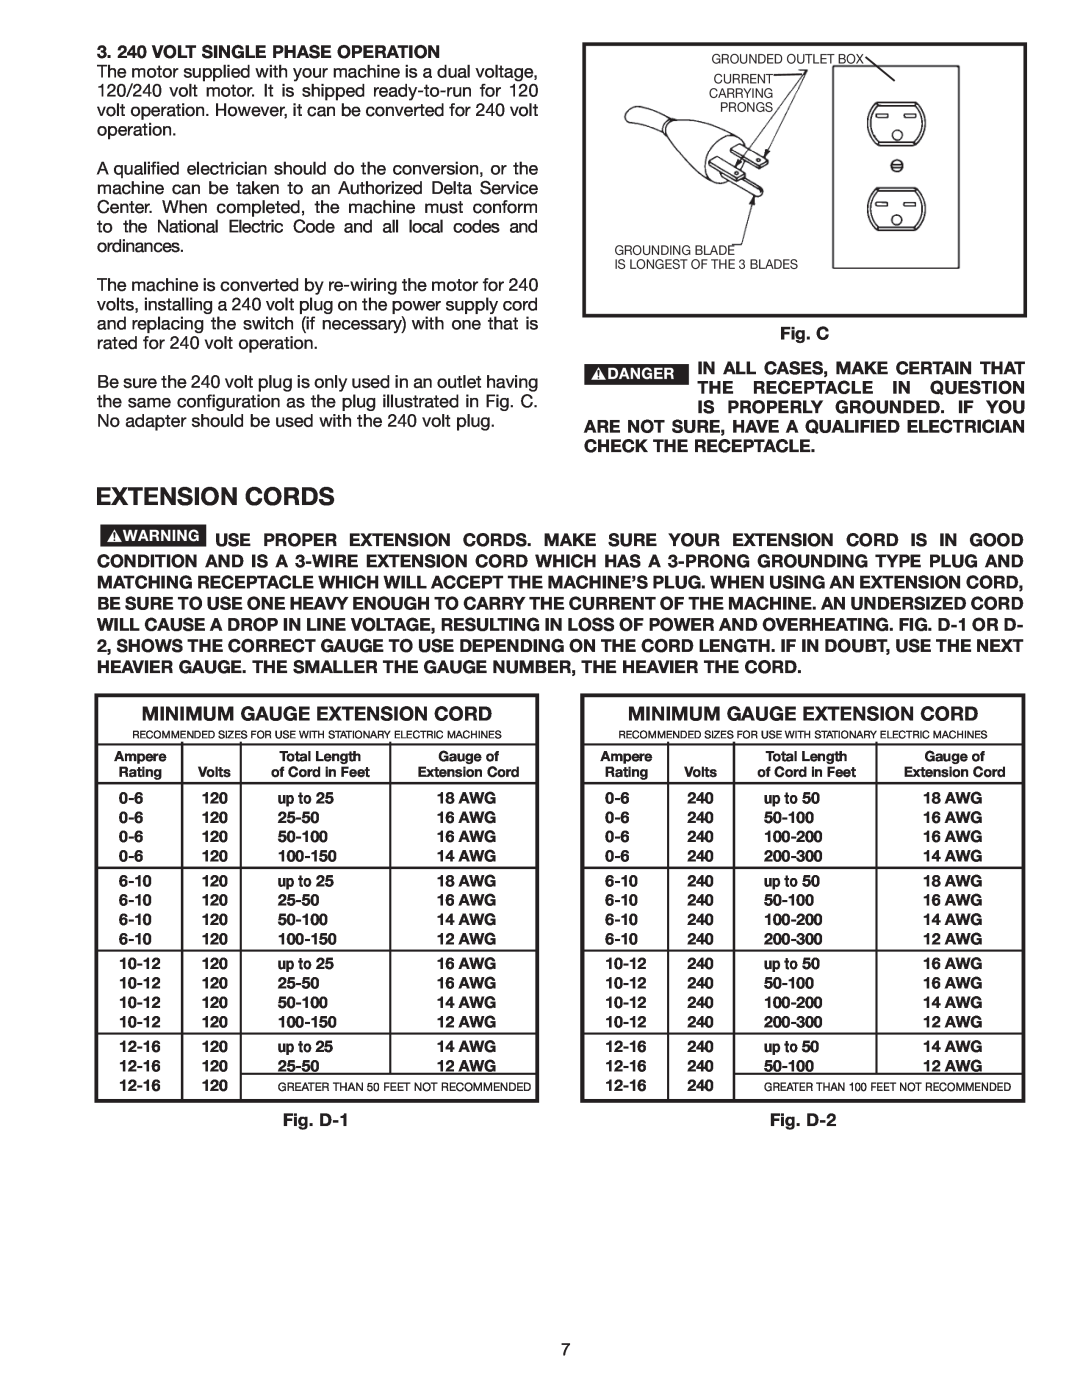 Delta 36-978 instruction manual Extension Cords, Minimum Gauge Extension Cord 